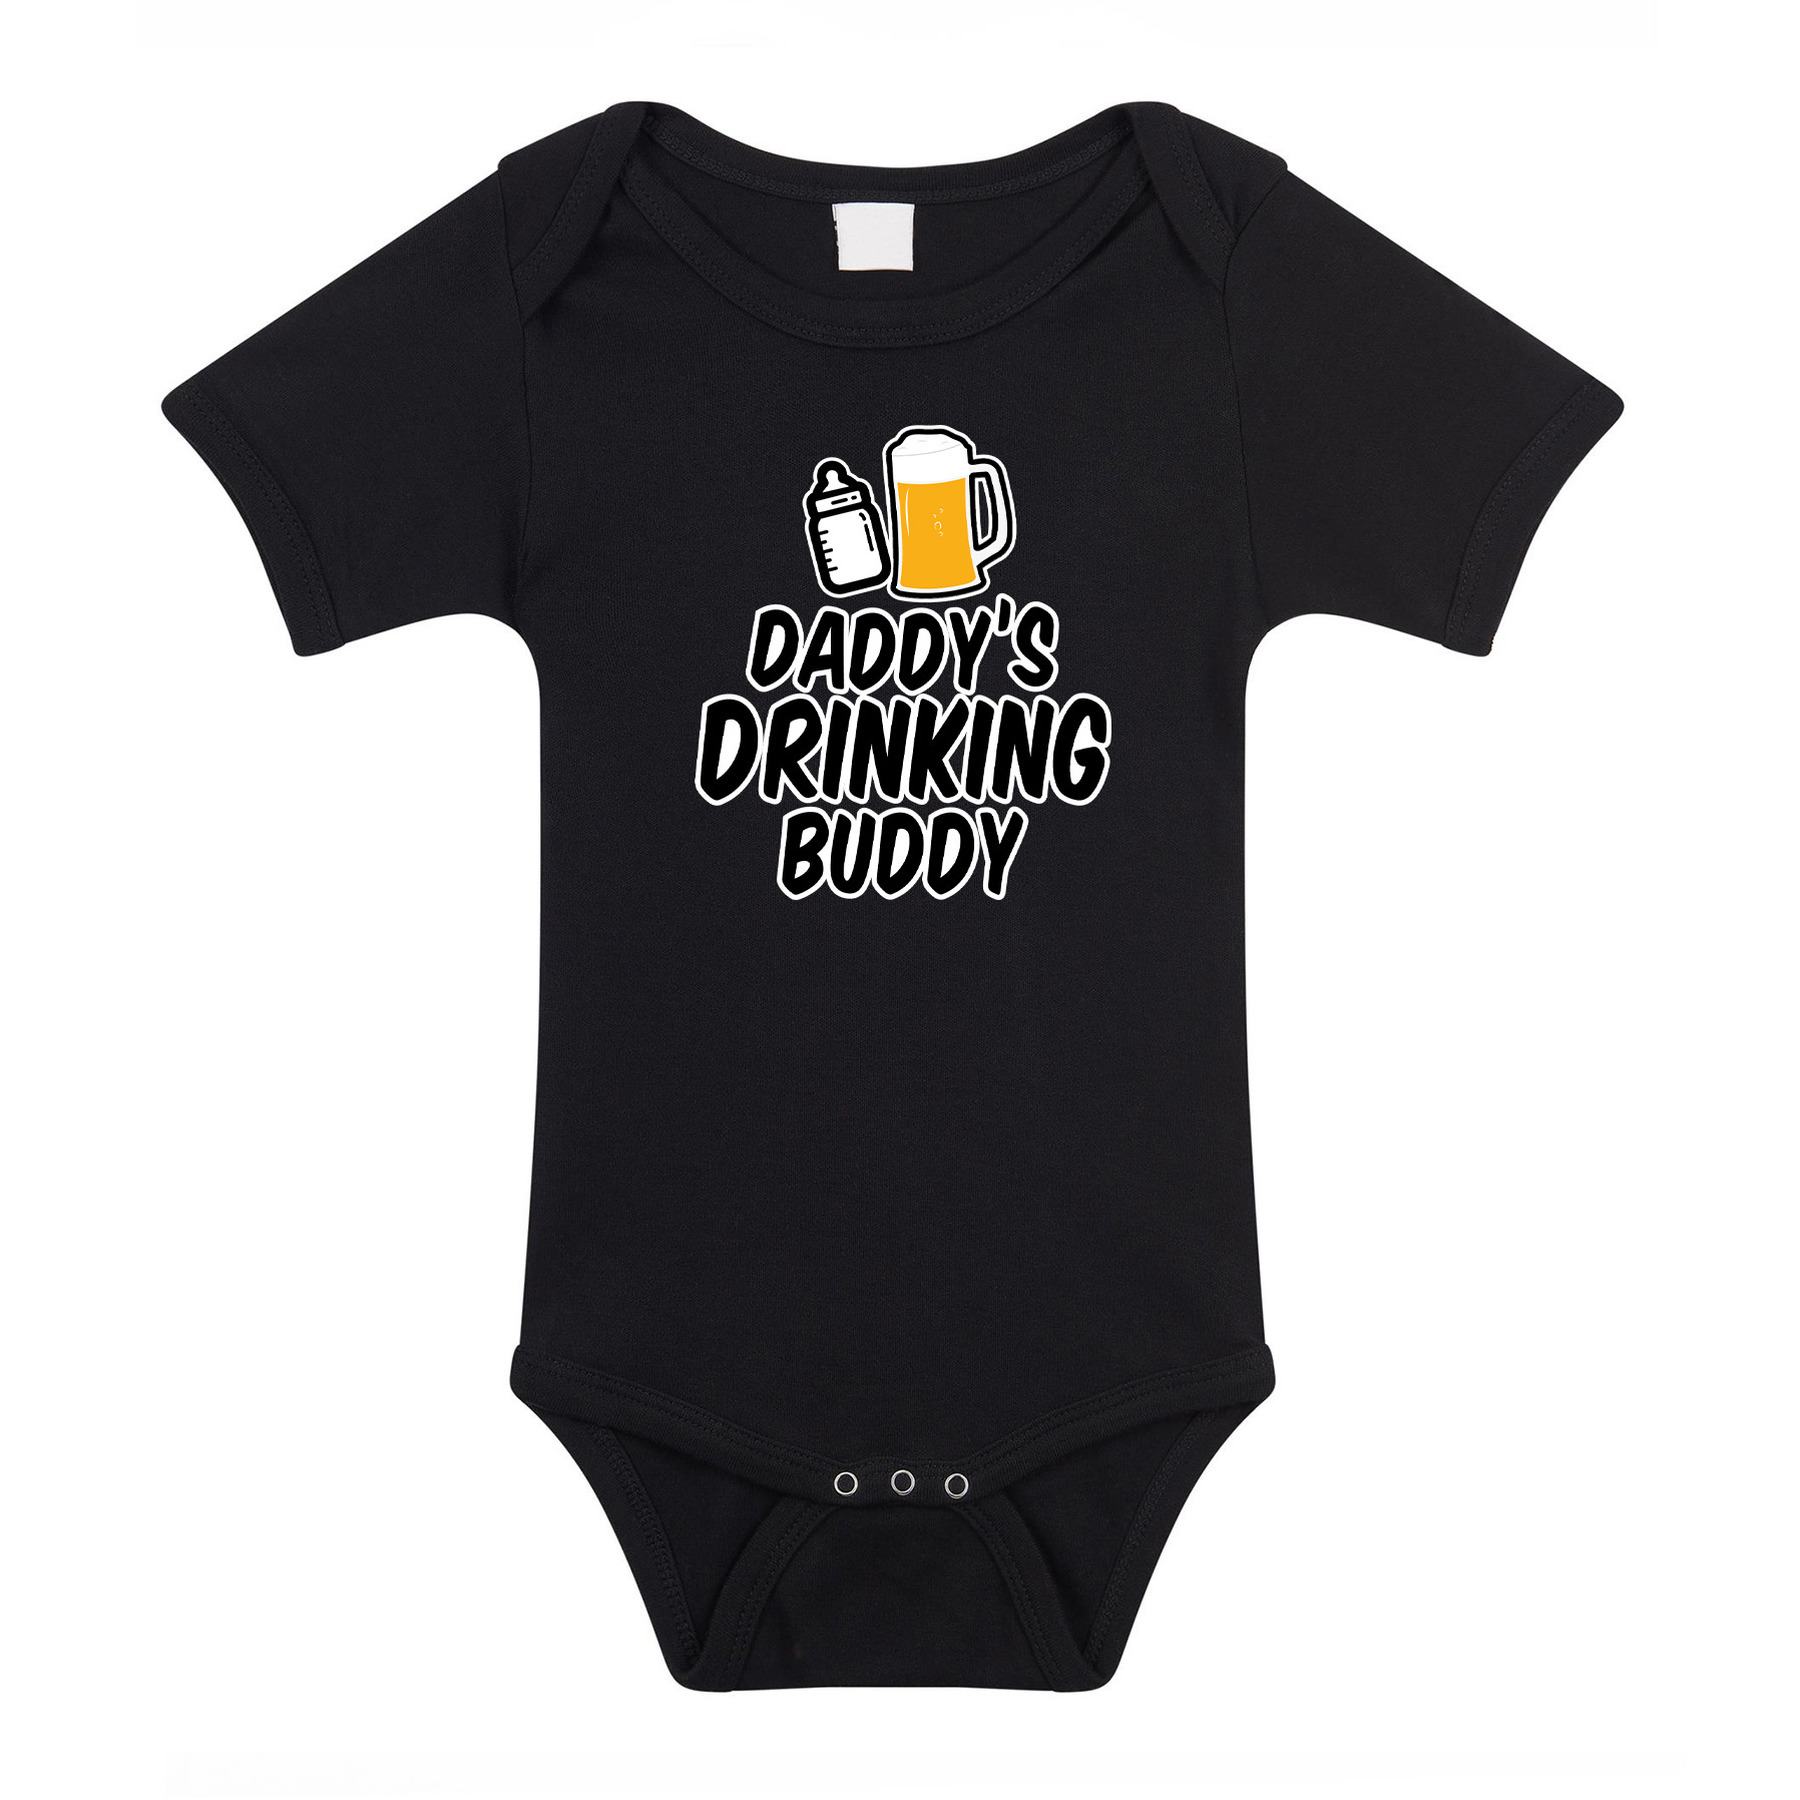 Daddys drinking buddy geboorte cadeau-kraamcadeau romper zwart voor babys